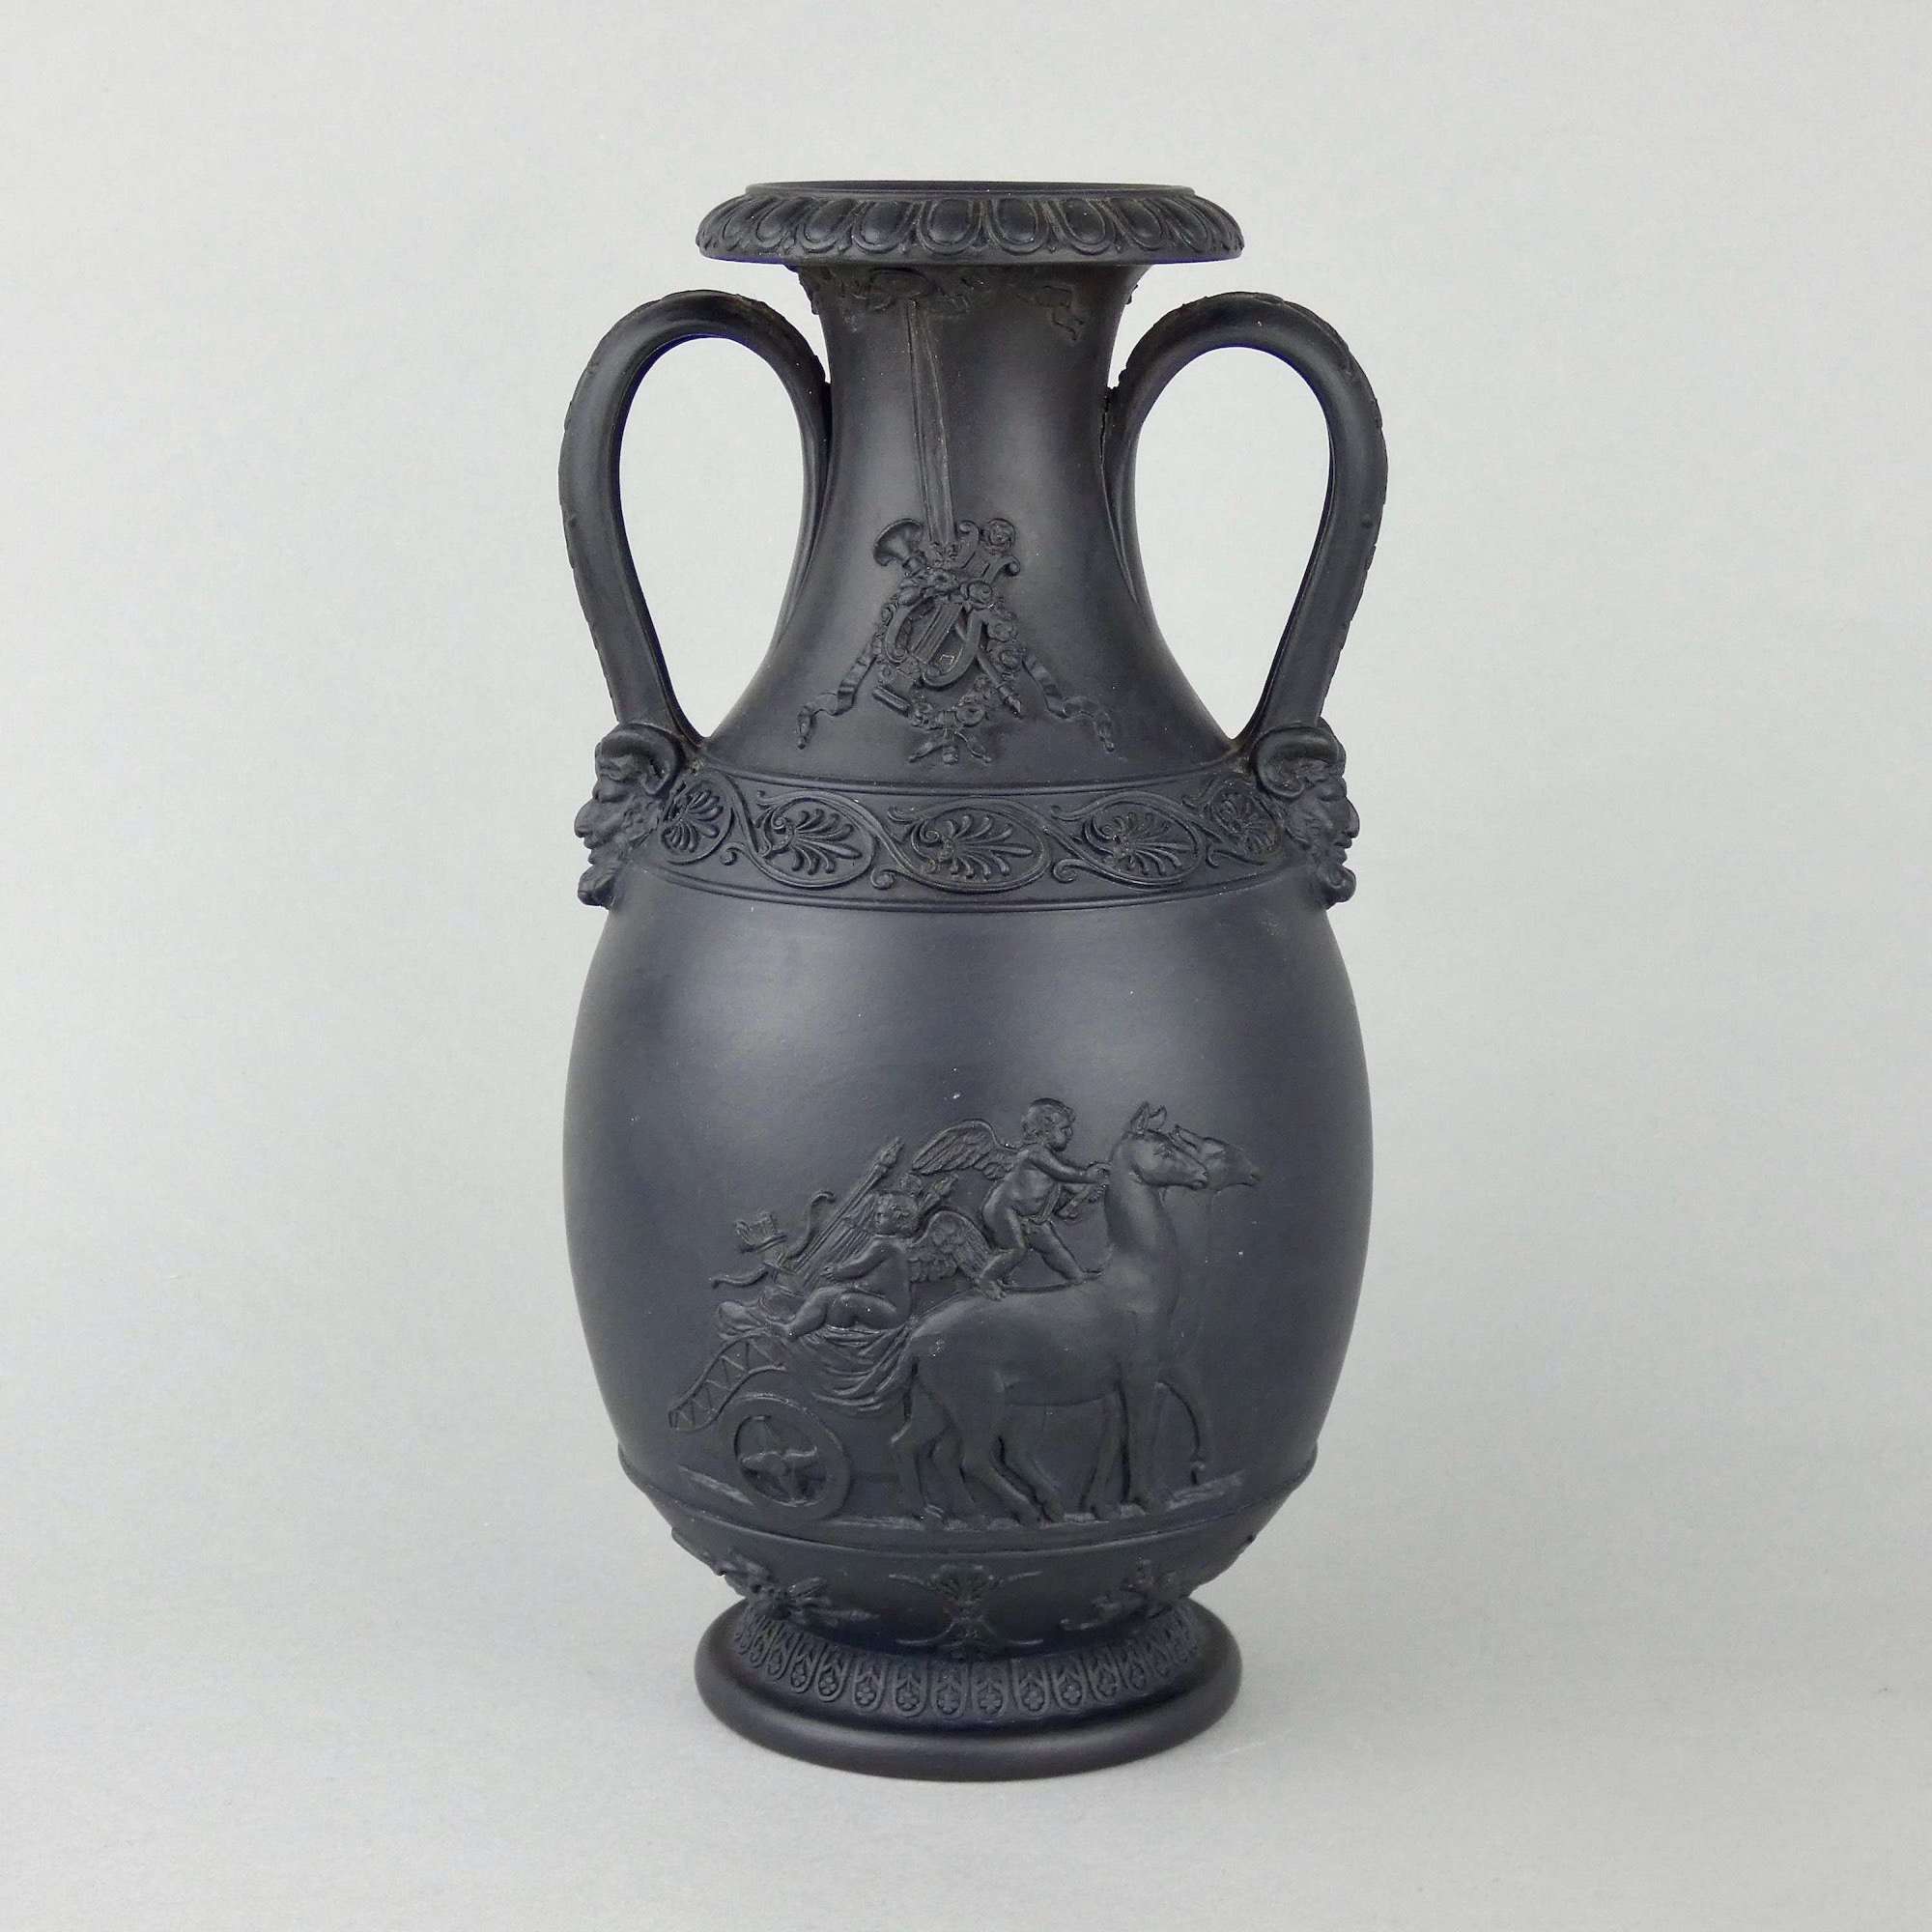 18th century, Wedgwood basalt vase